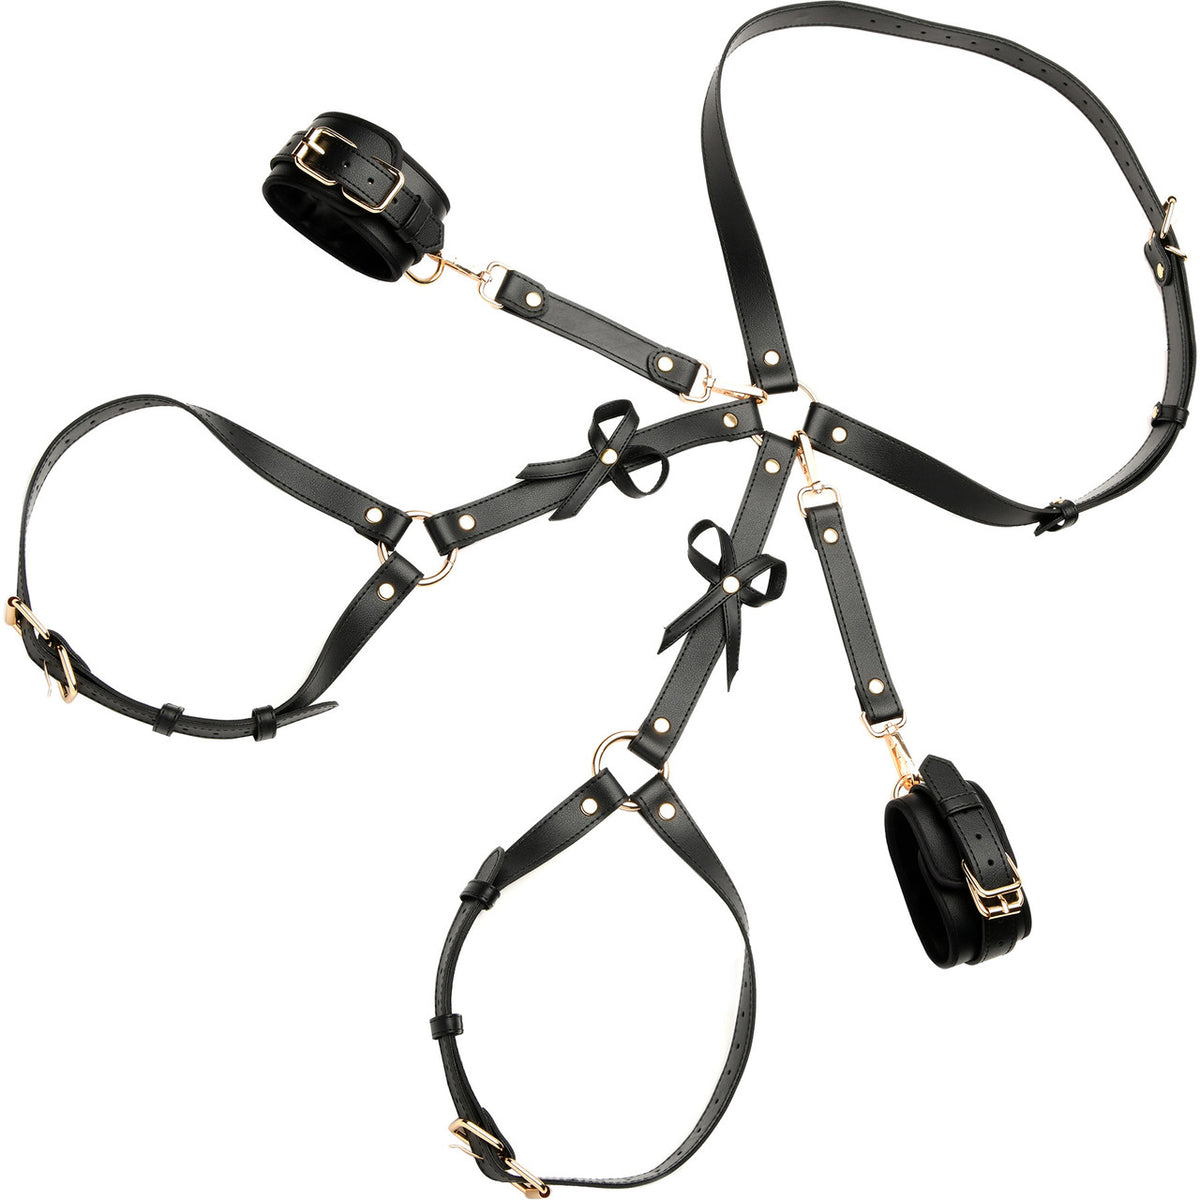 Bondage Harness with Bows M/L - Black